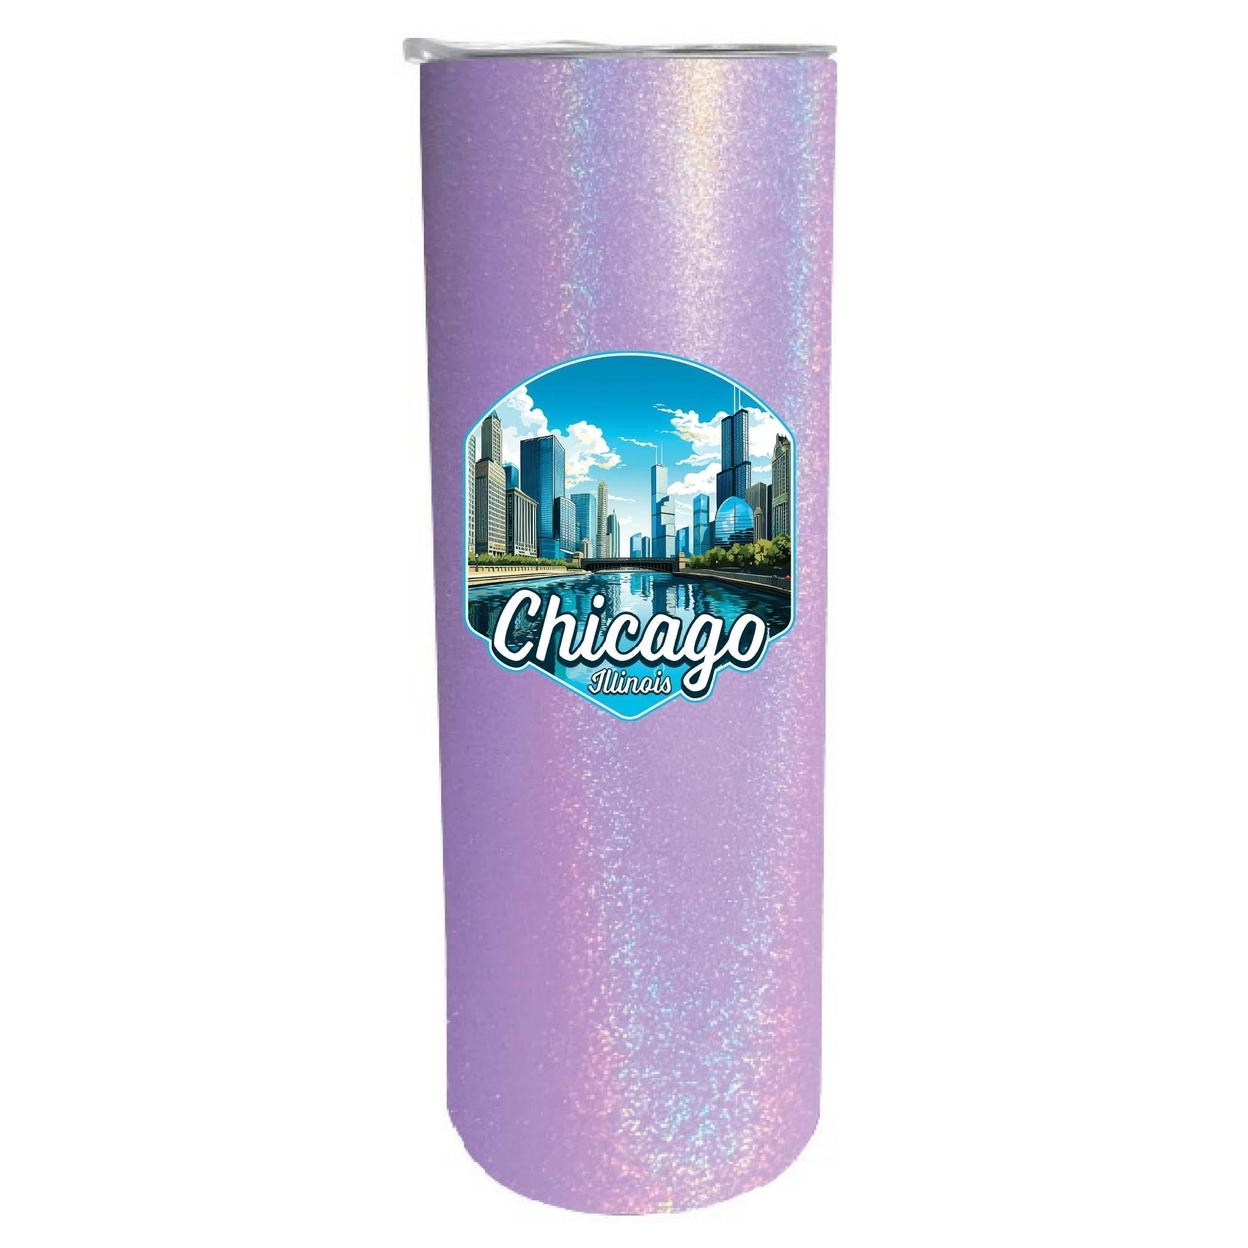 Chicago Illinois A Souvenir 20 Oz Insulated Skinny Tumbler - Purple Glitter,,4-Pack